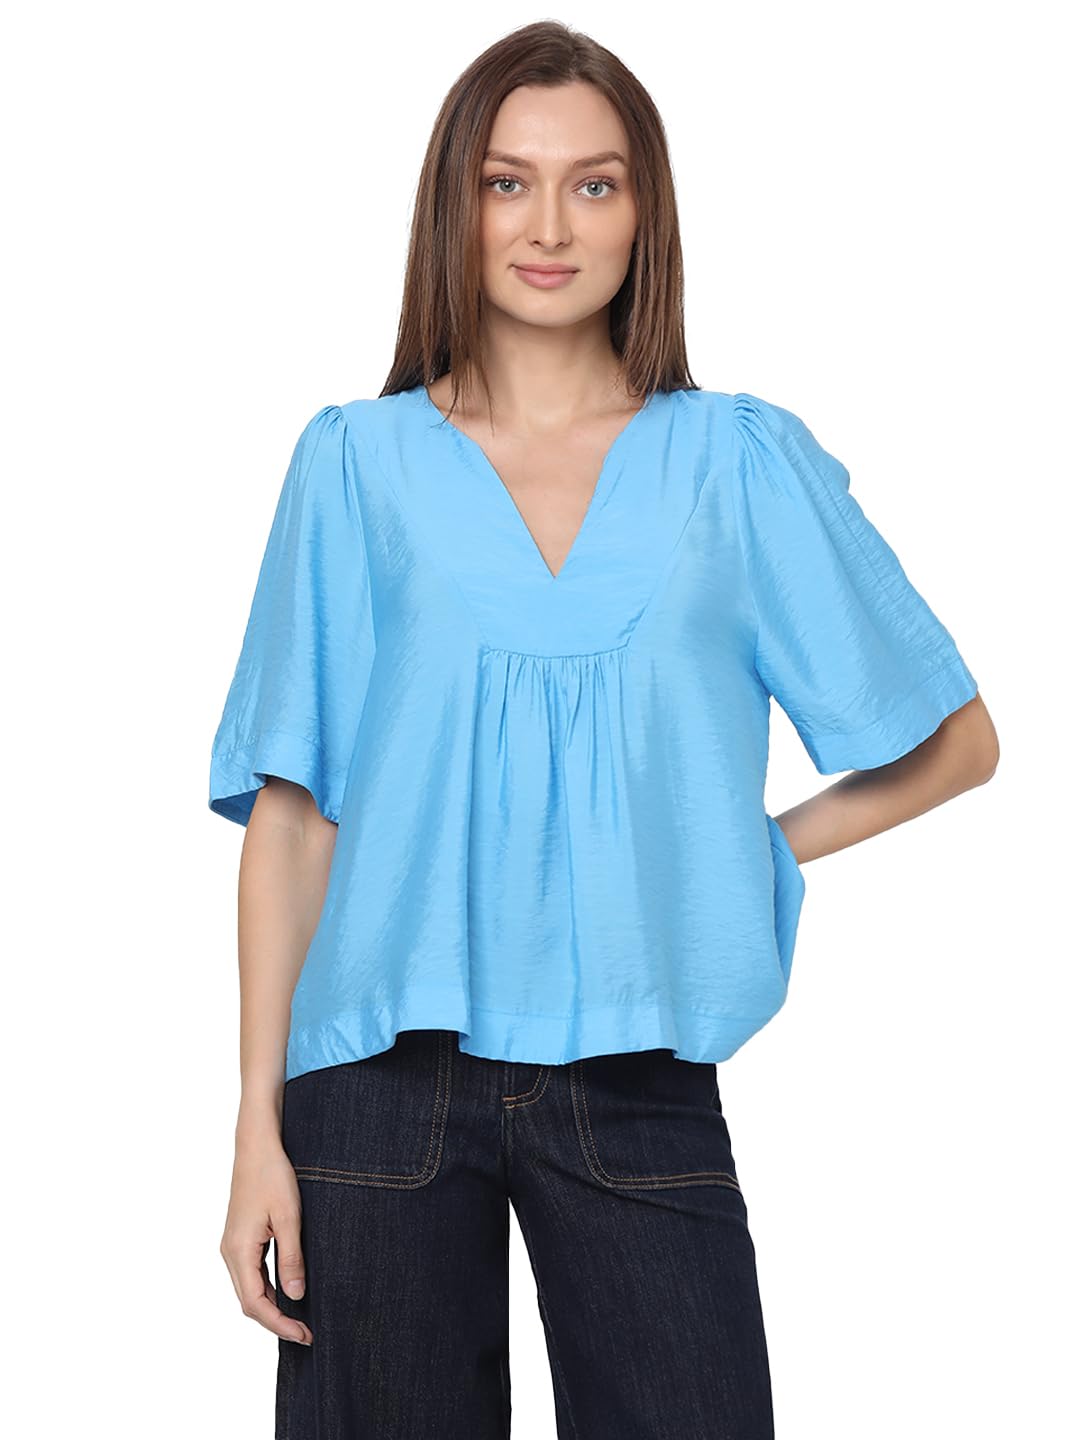 VERO MODA Women's Regular Fit T-Shirt (10296018-Bonnie Blue_Bonnie